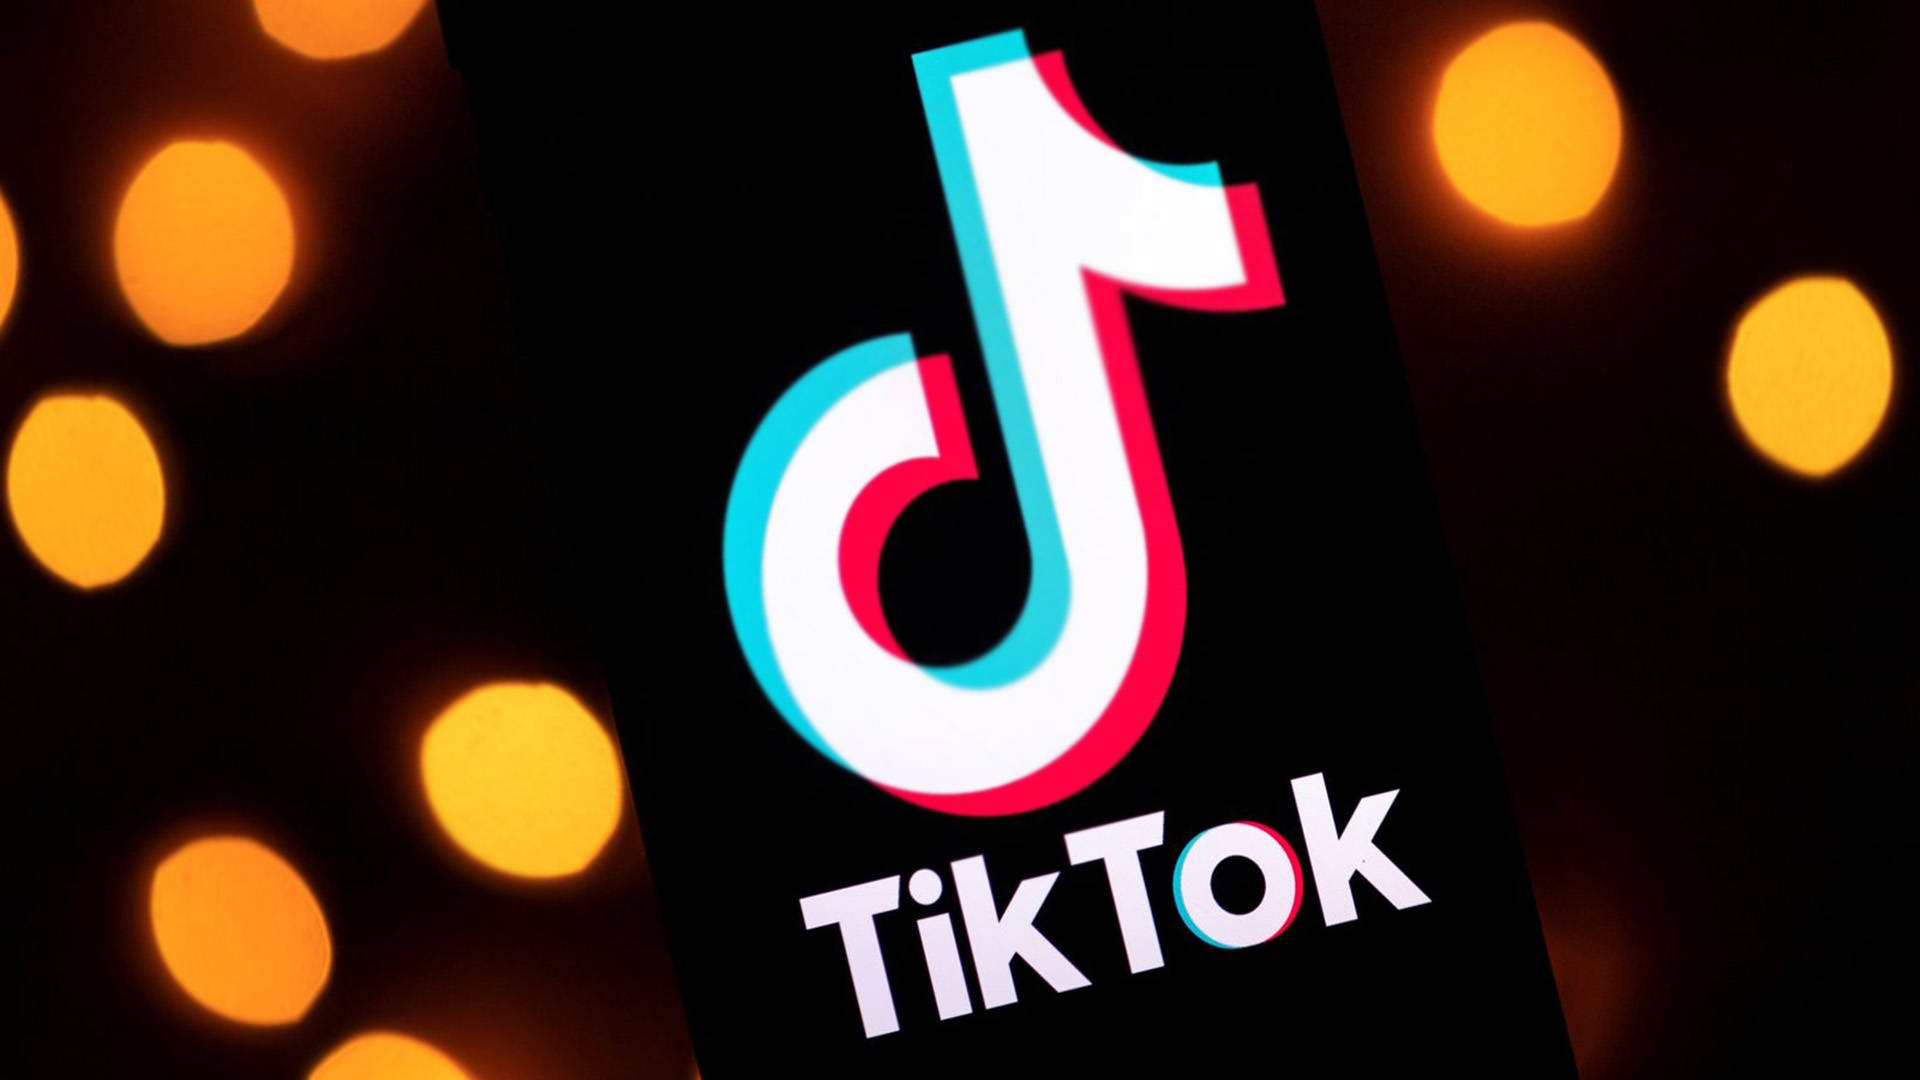 Tiktok Logo Bokeh Background Wallpaper